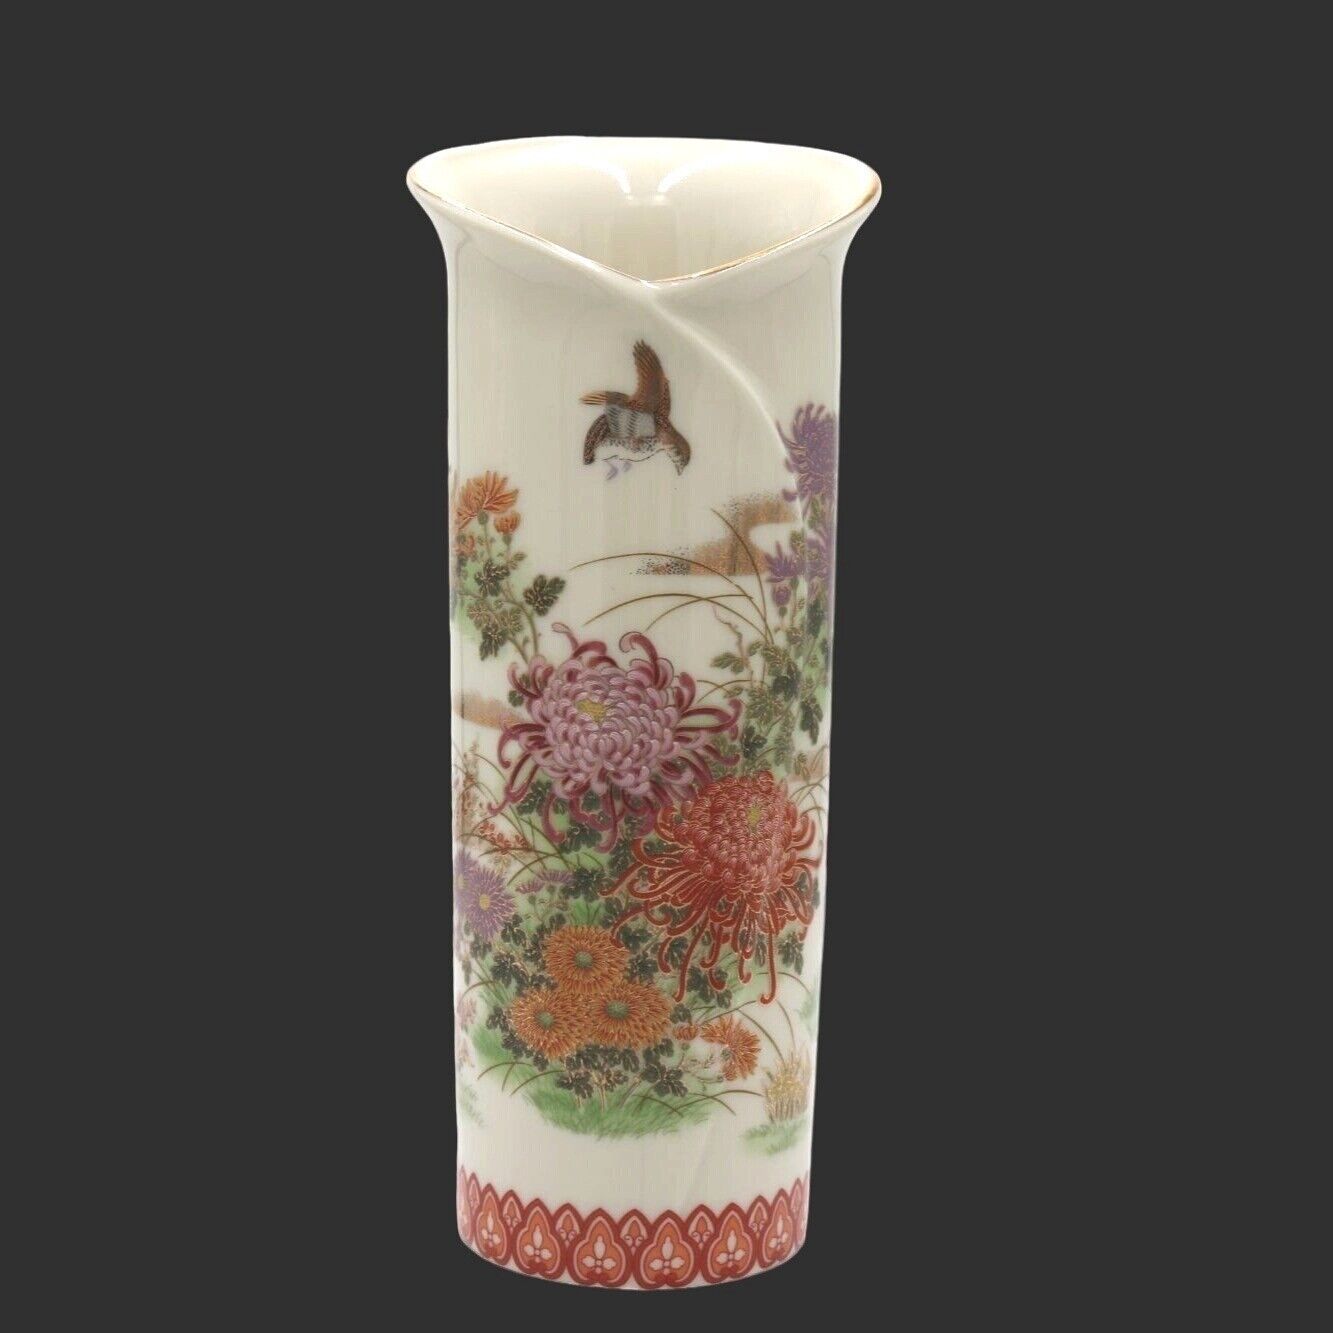 Rare Find. Late 20th Century, Vintage Shibata Vase